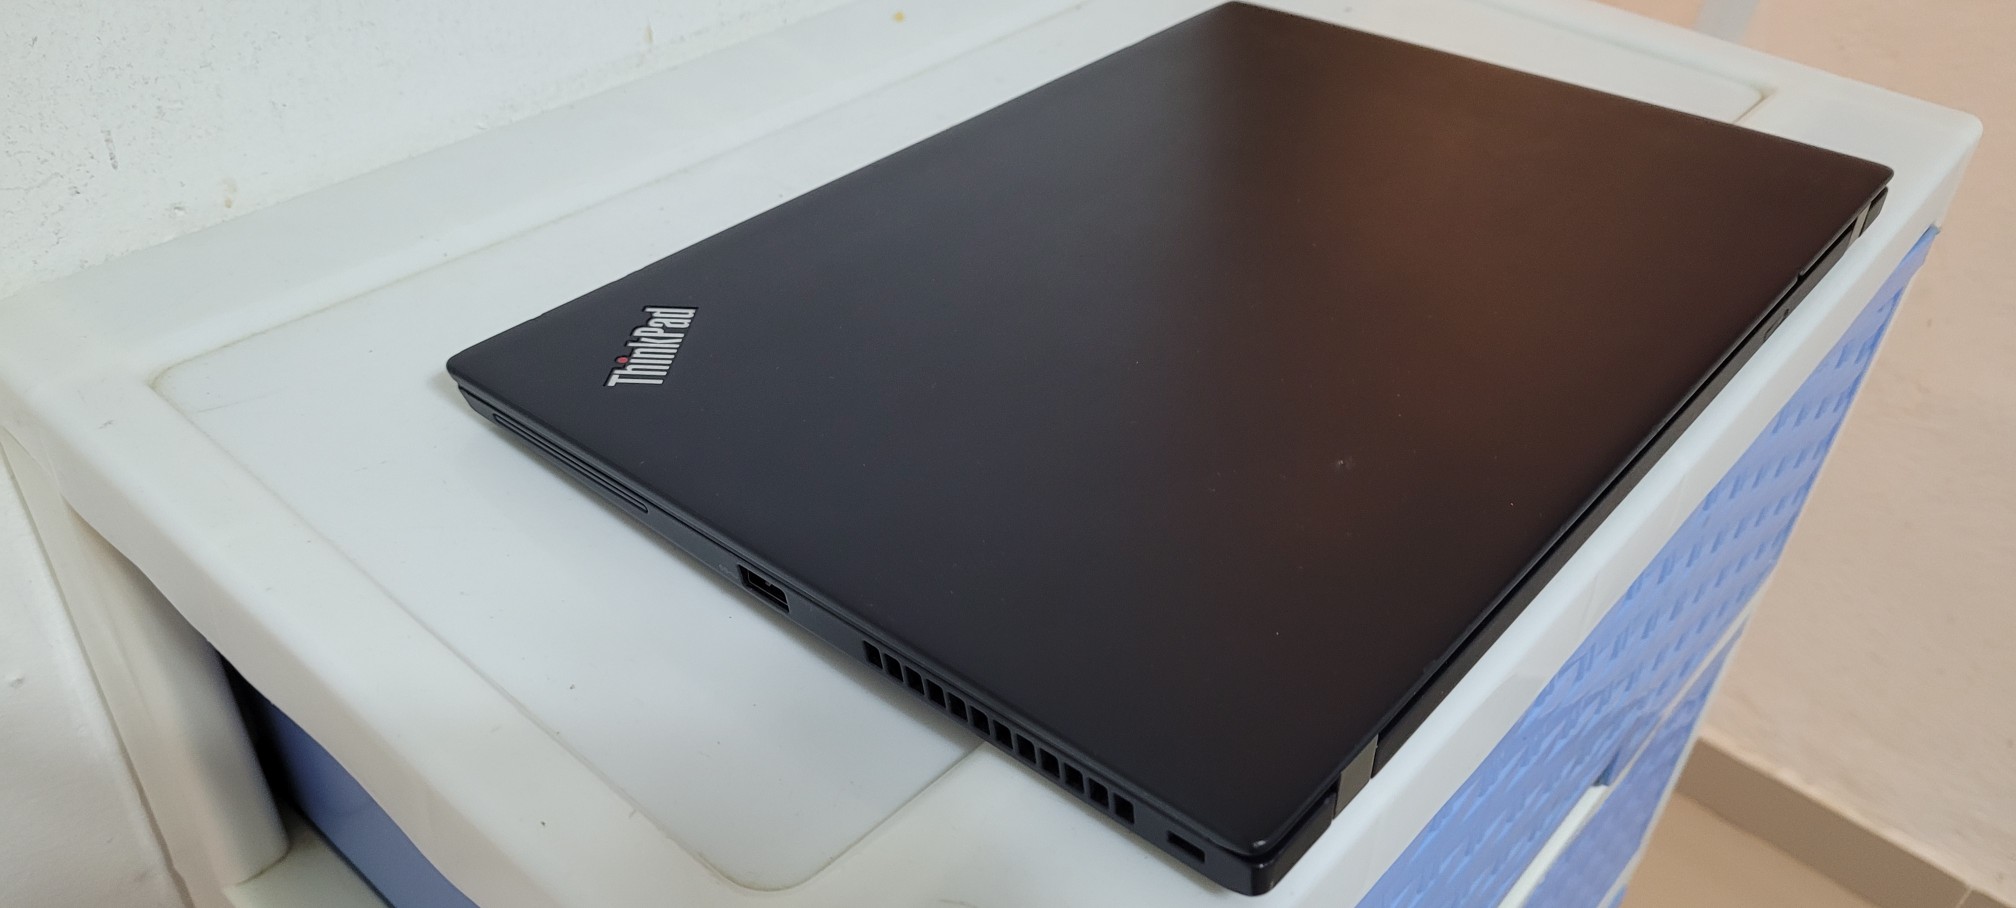 computadoras y laptops - Lenovo t460 14 Pulg Core i5 6ta Gen Ram 8gb ddr4 Disco 256gb Solido 2